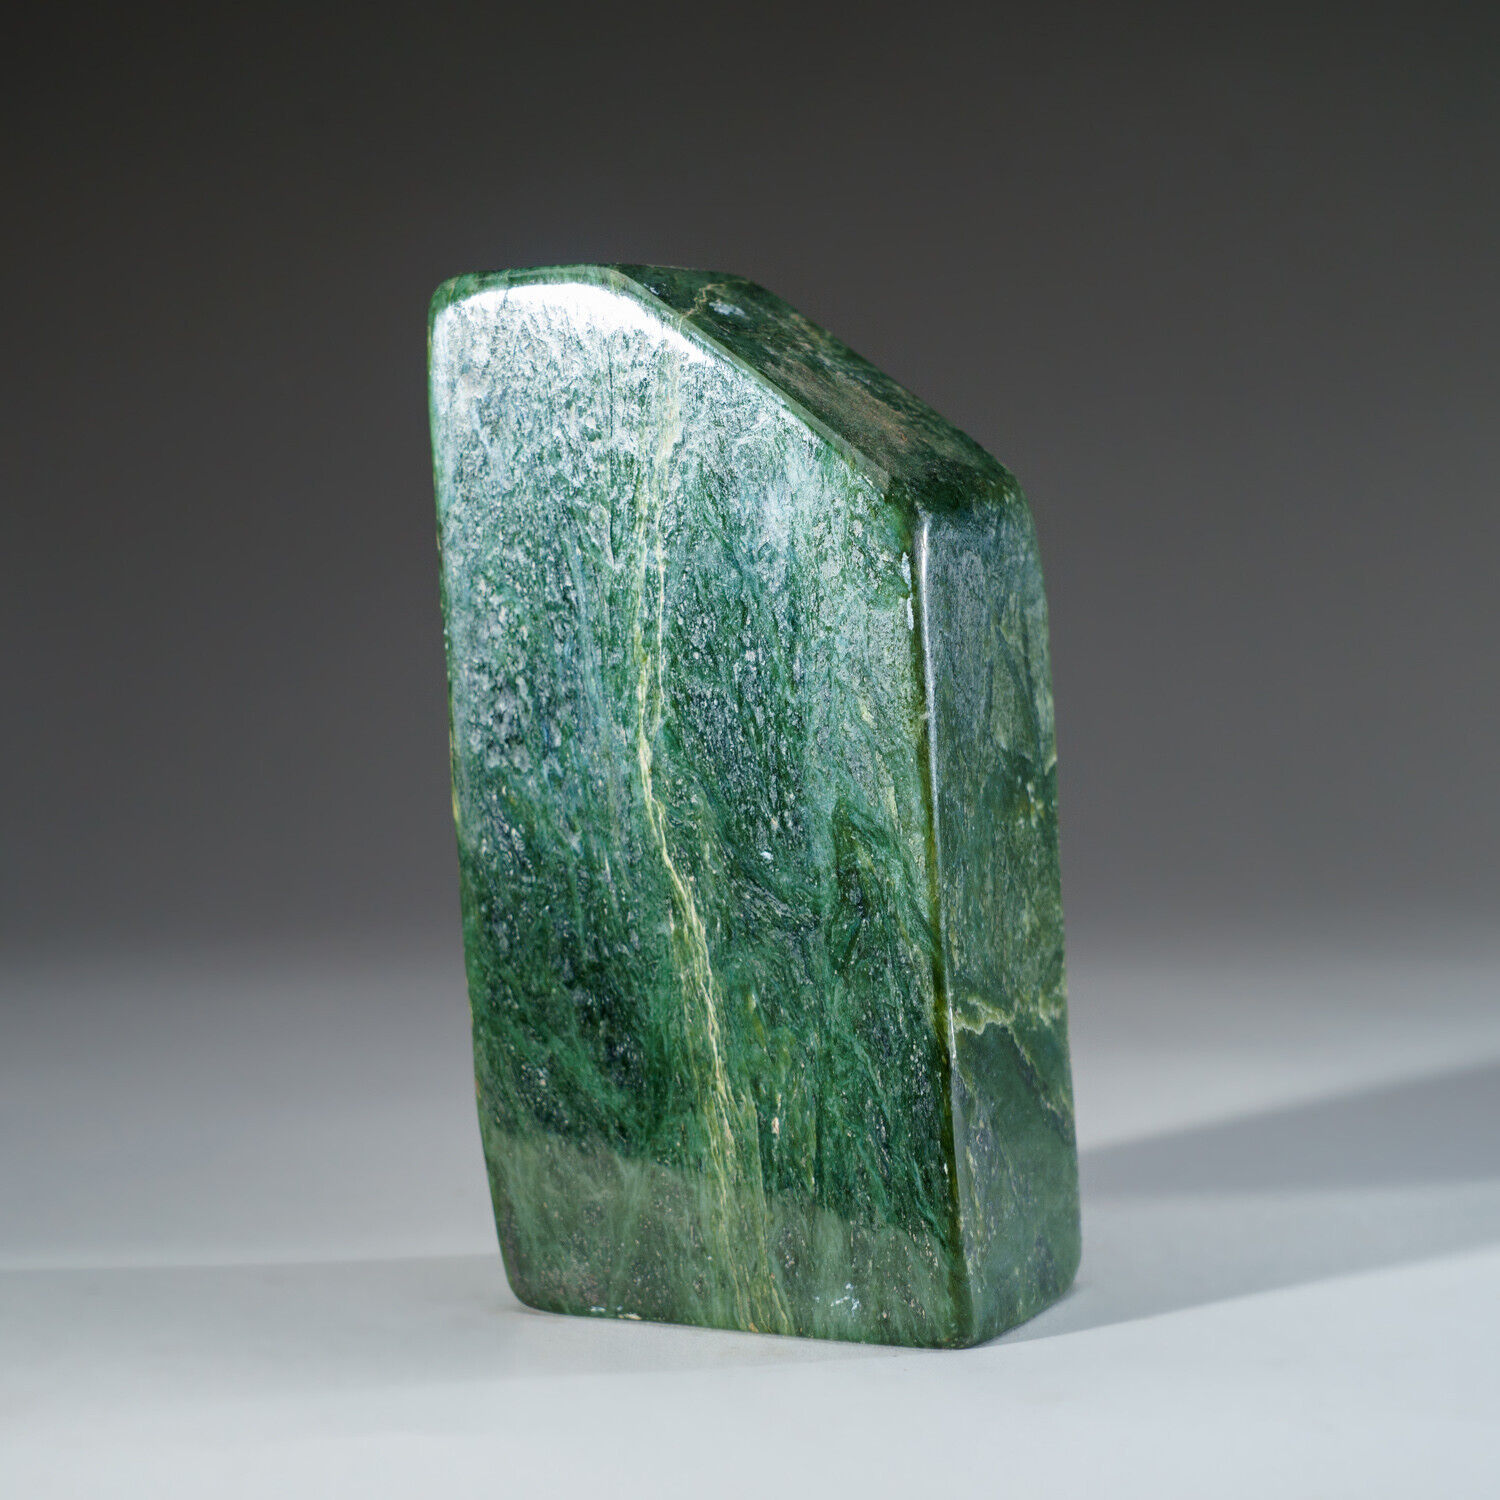 Polished Nephrite Jade Freeform from Pakistan (3 lbs)